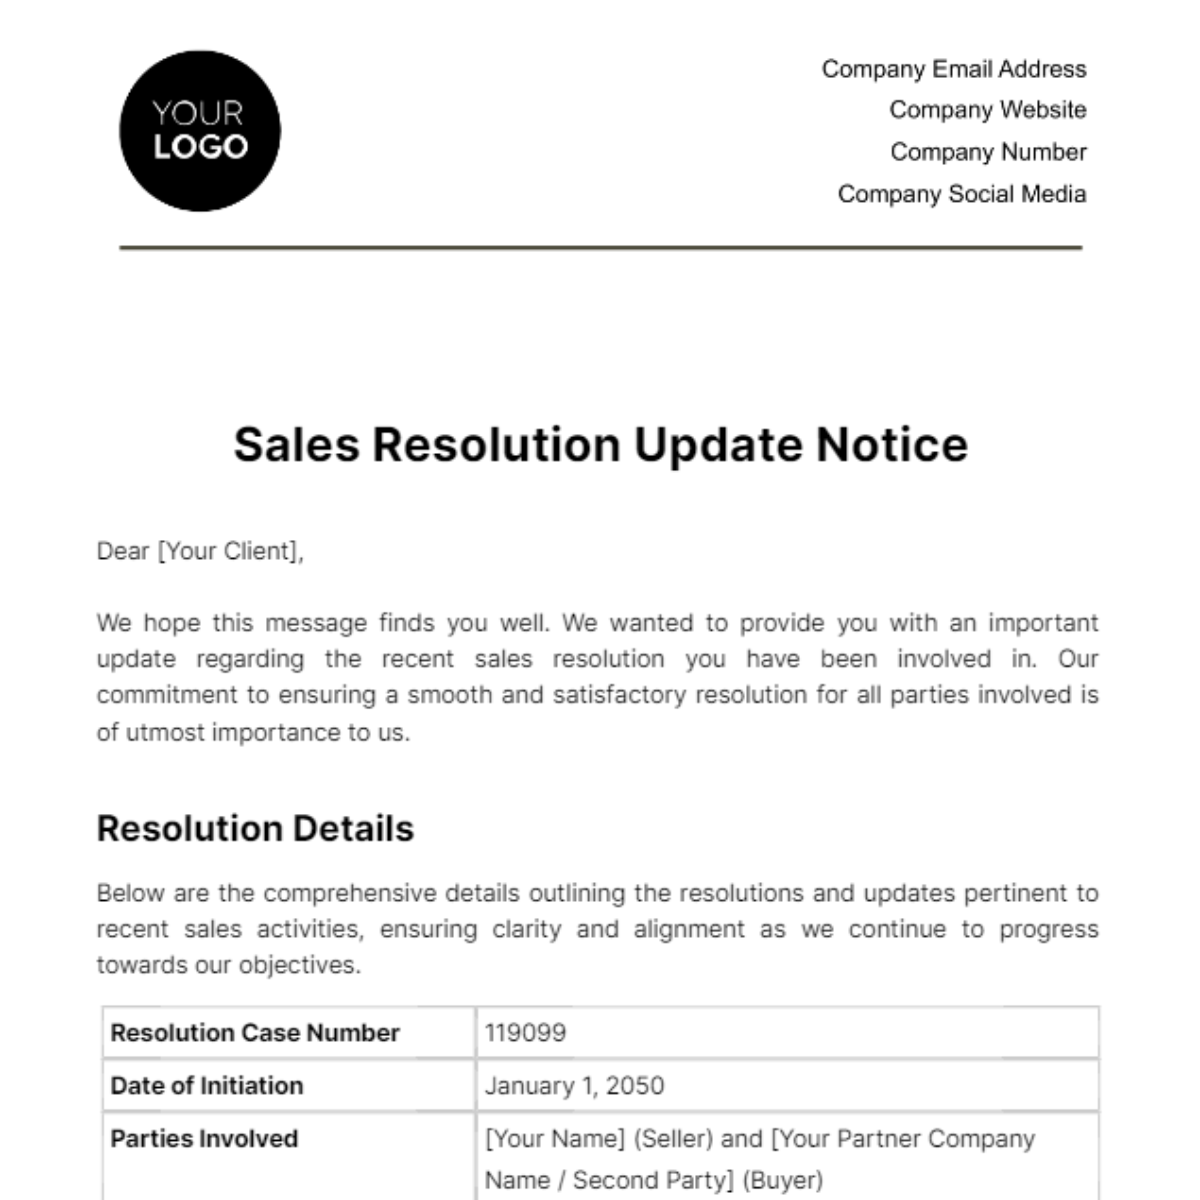 Sales Resolution Update Notice Template